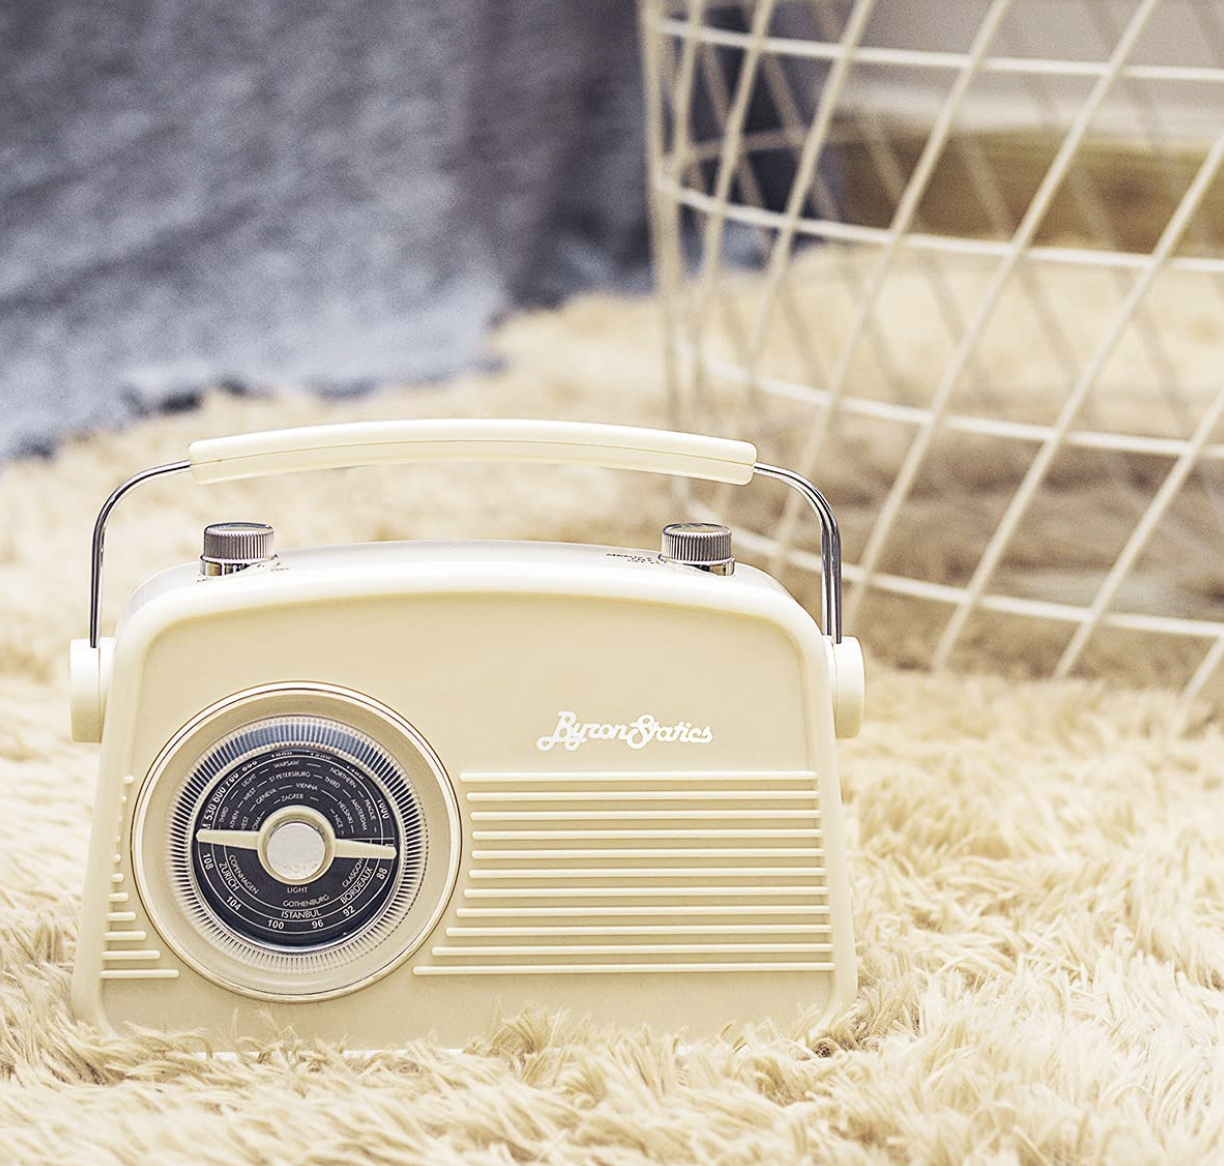 the portable vintage-style radio in cream